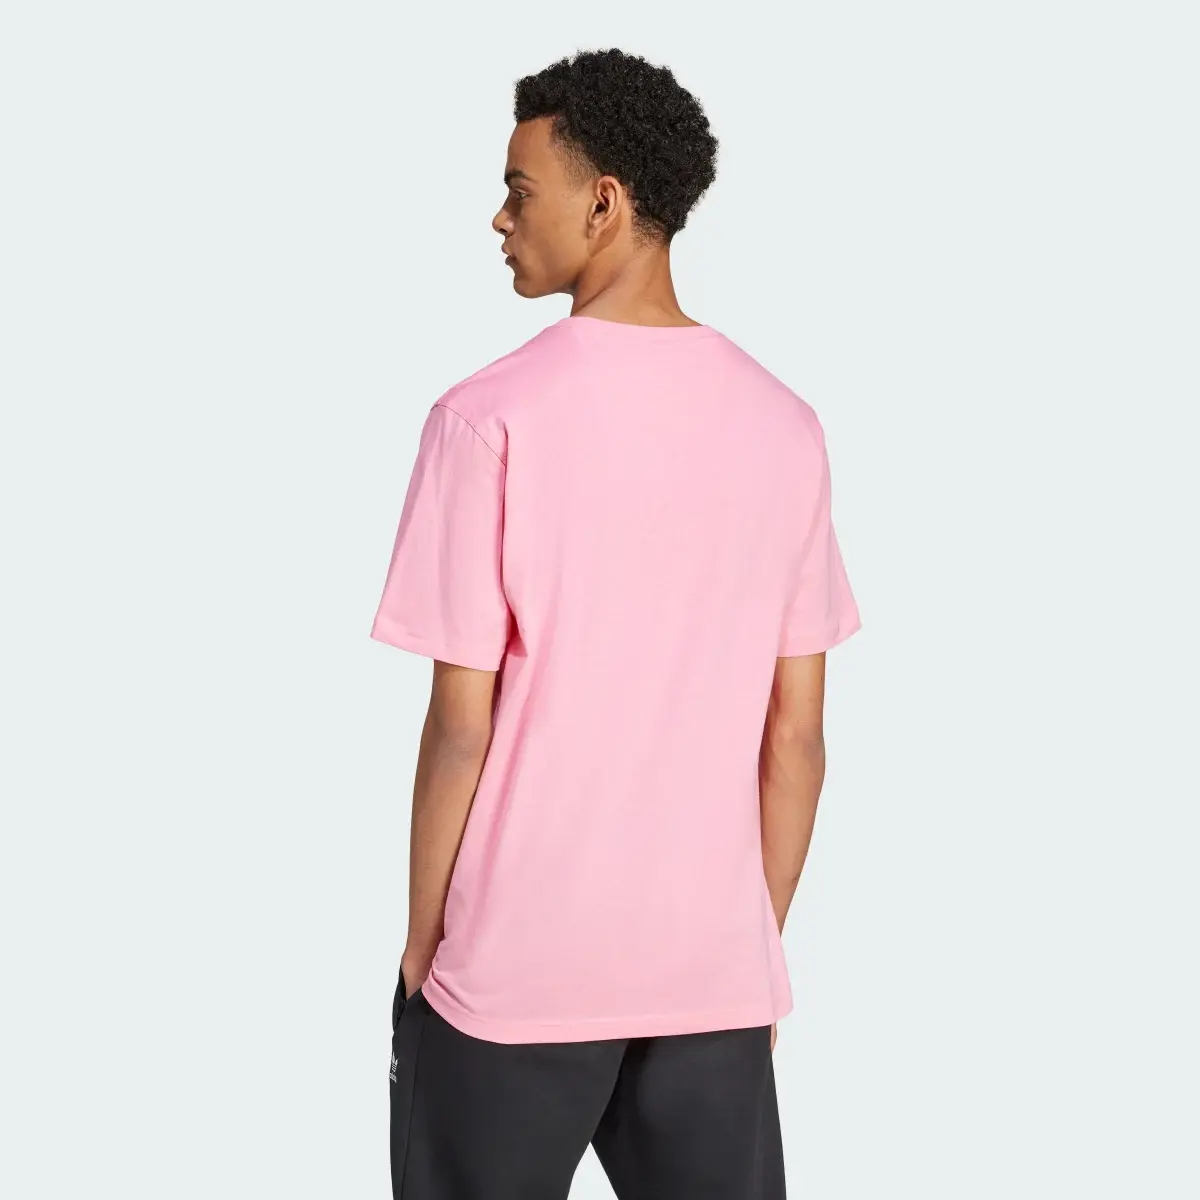 Adidas T-shirt rose. 3